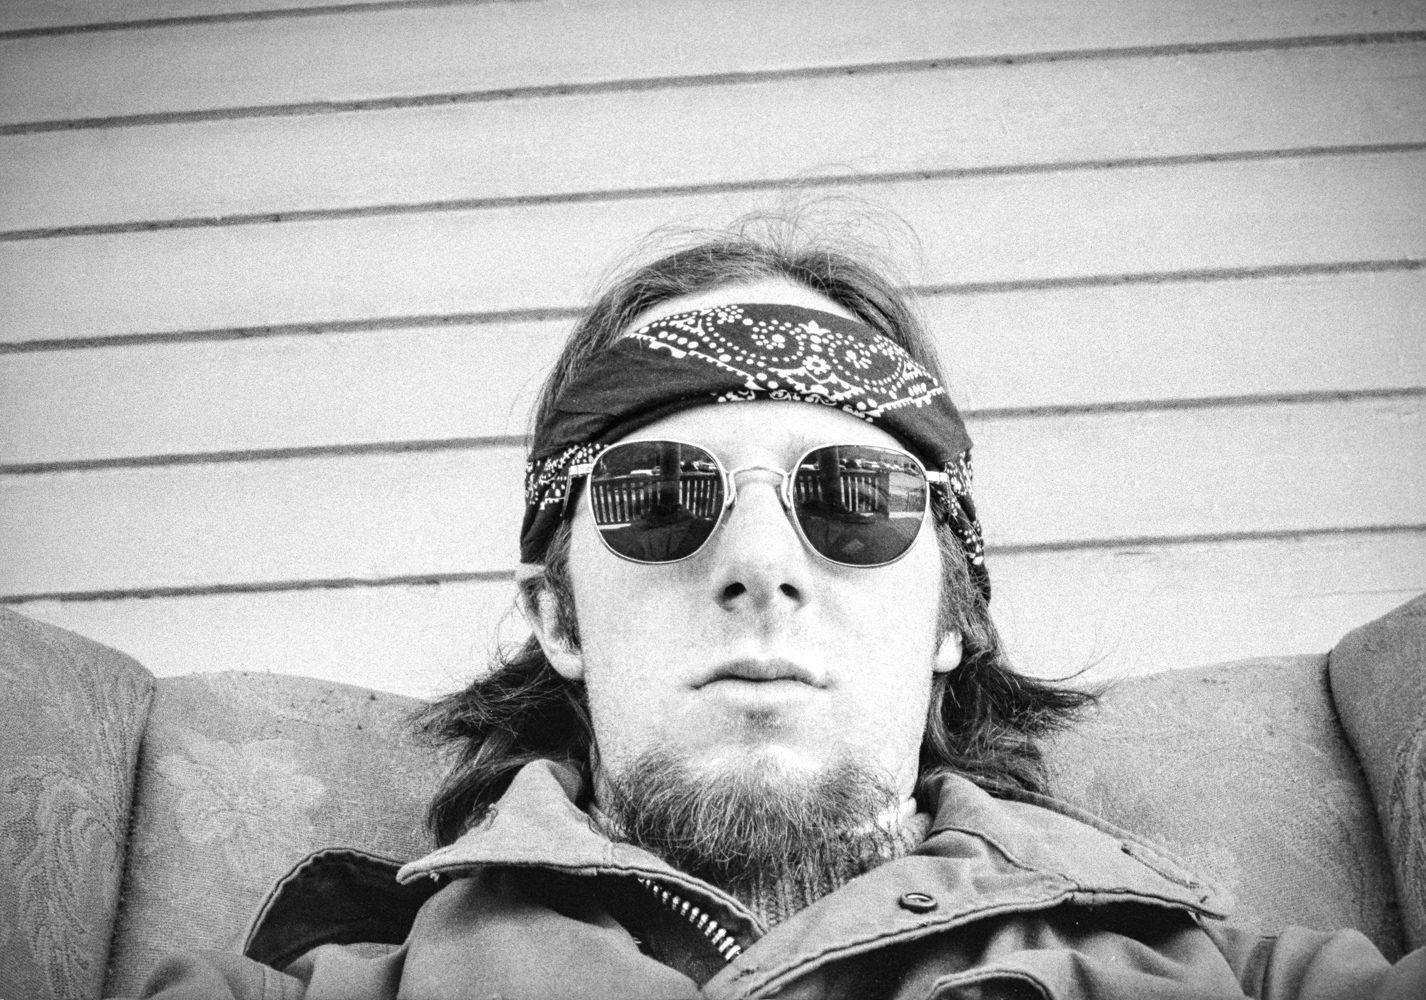 Self-portrait, Rochester, NY 1971